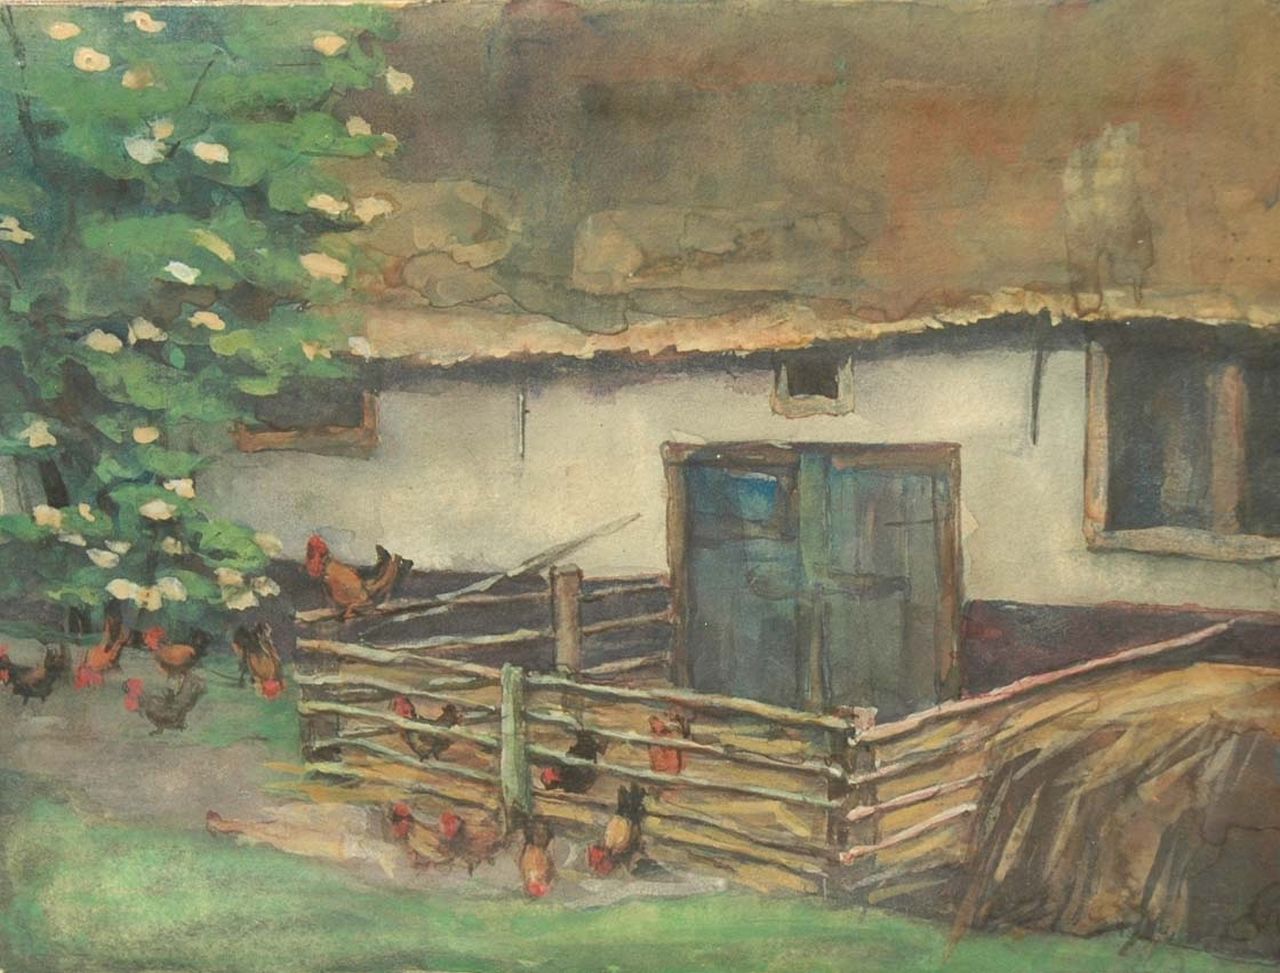 Fritzlin M.C.L.  | Maria Charlotta 'Louise' Fritzlin, A yard with chickens, watercolour on paper 14.2 x 19.1 cm